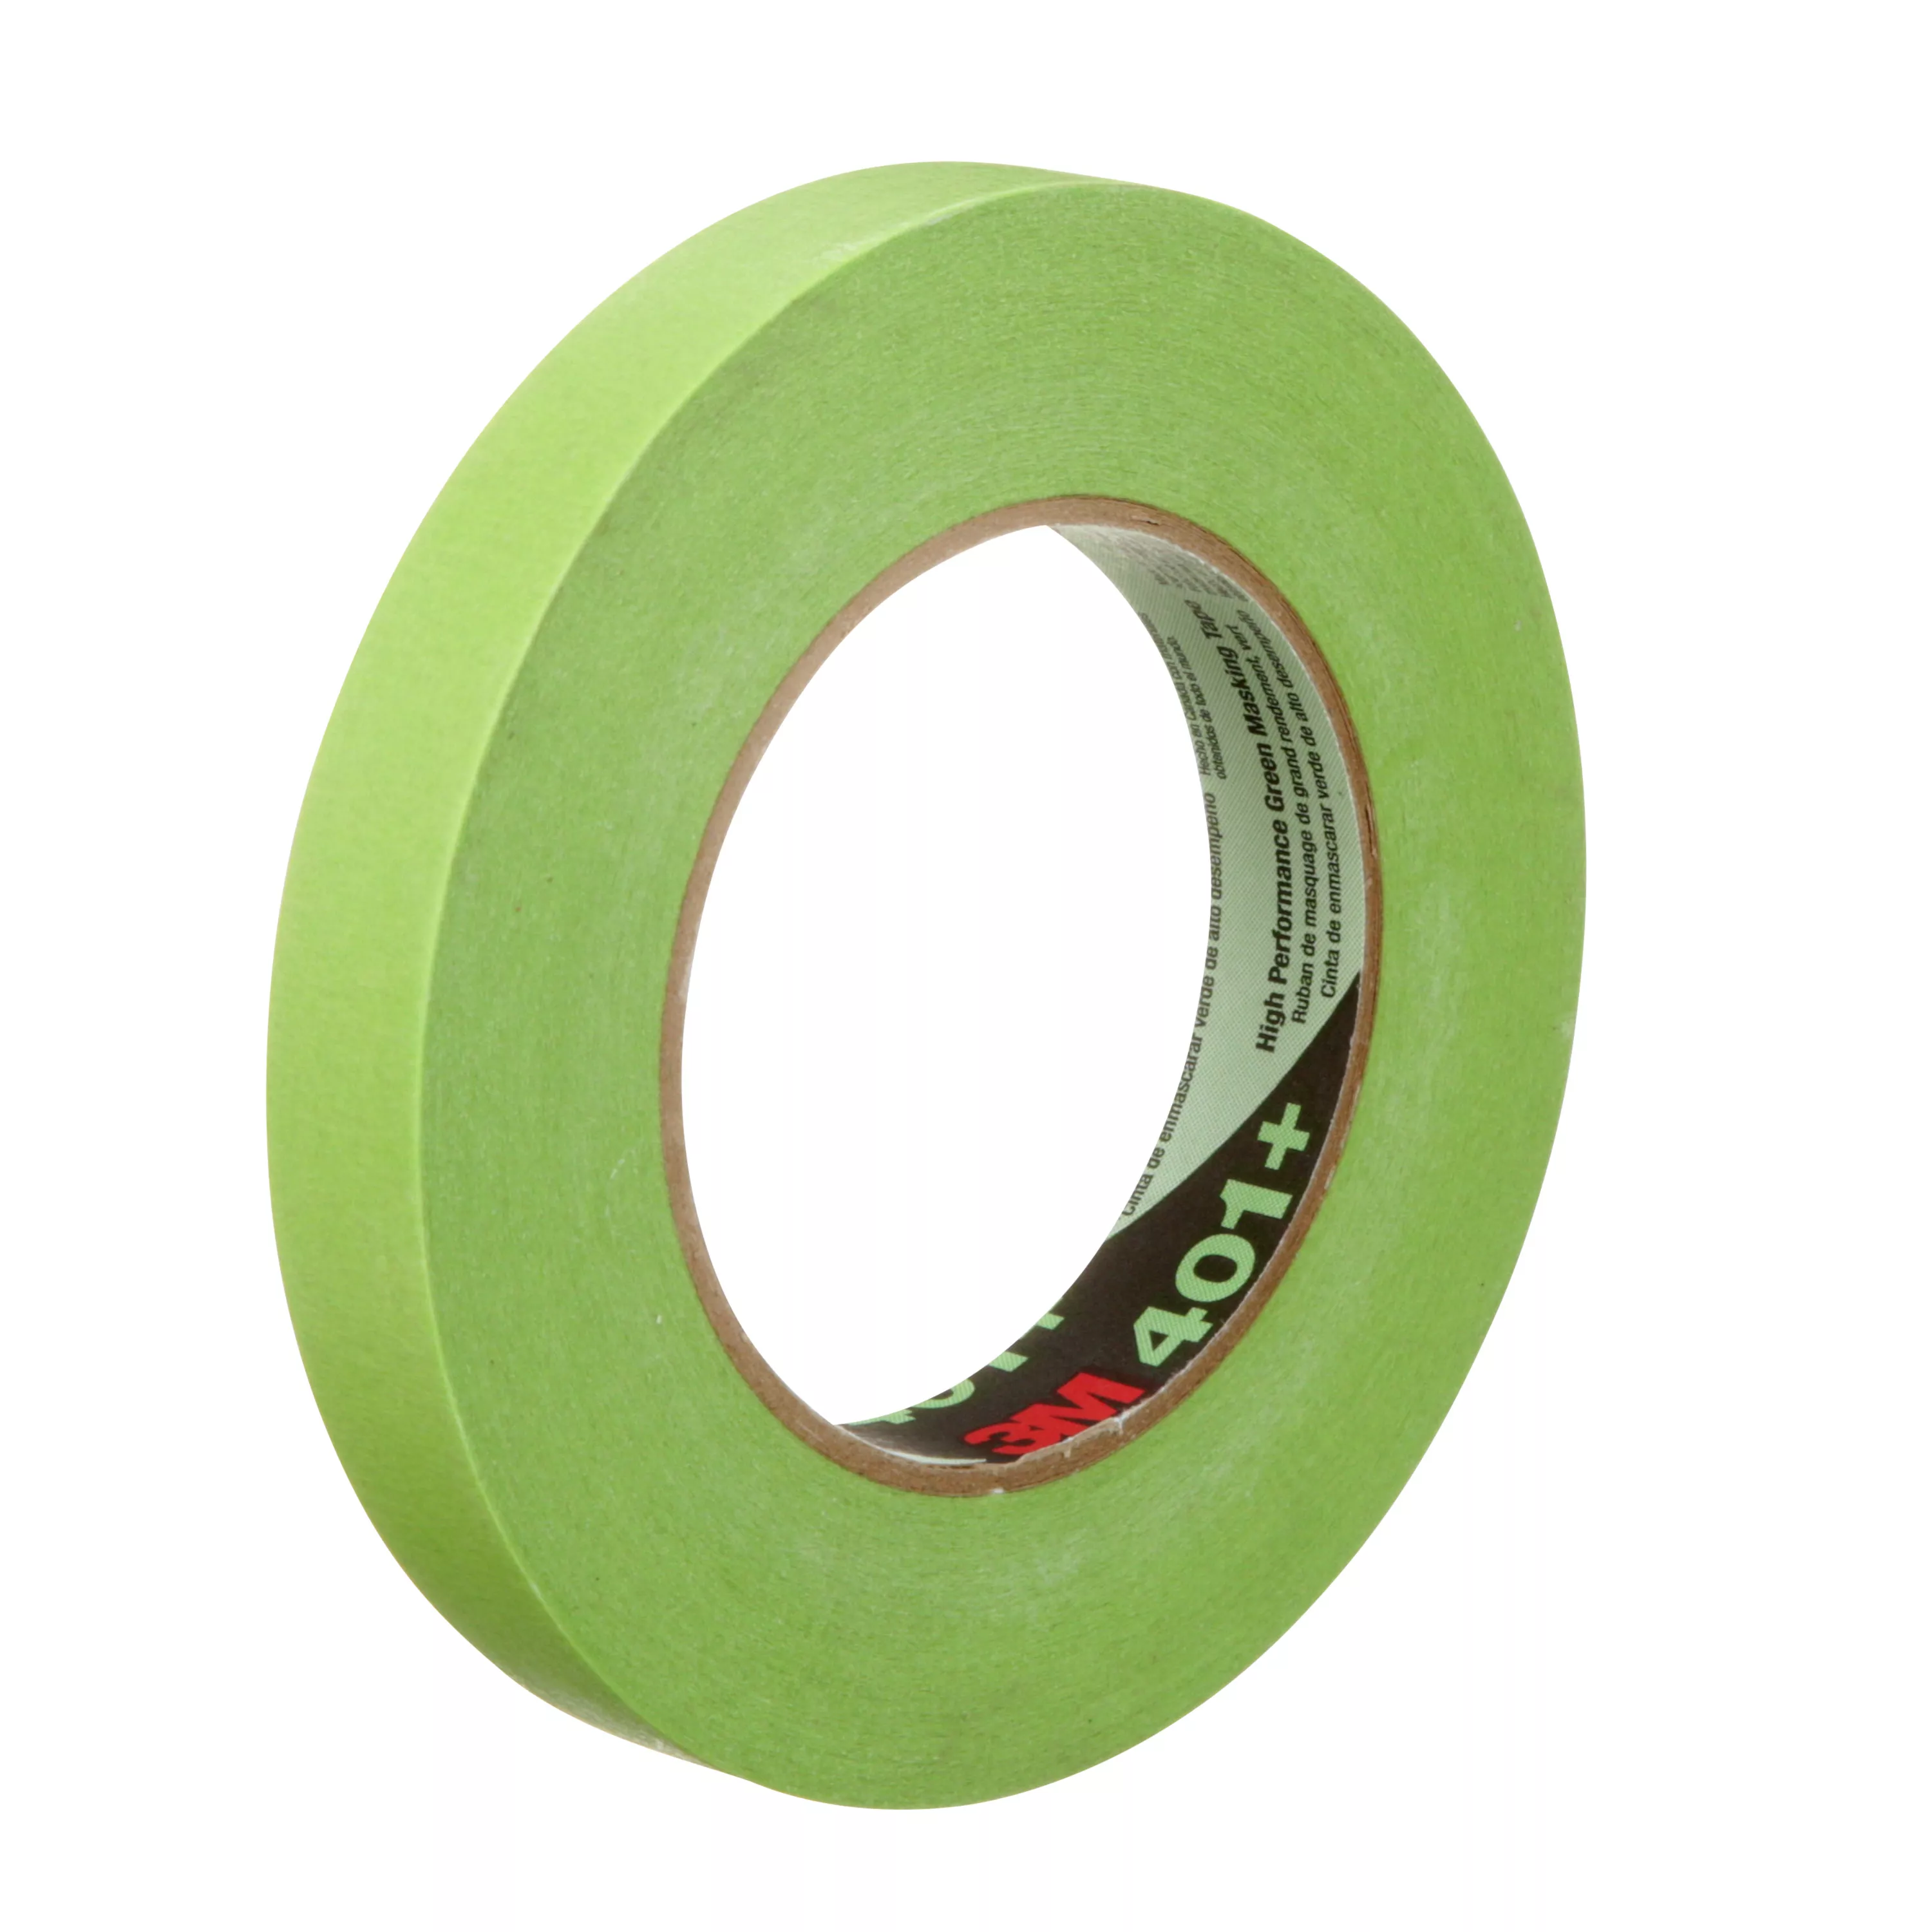 3M™ High Performance Green Masking Tape 401+, 18 mm x 55 m, 48 Roll
Roll/Case